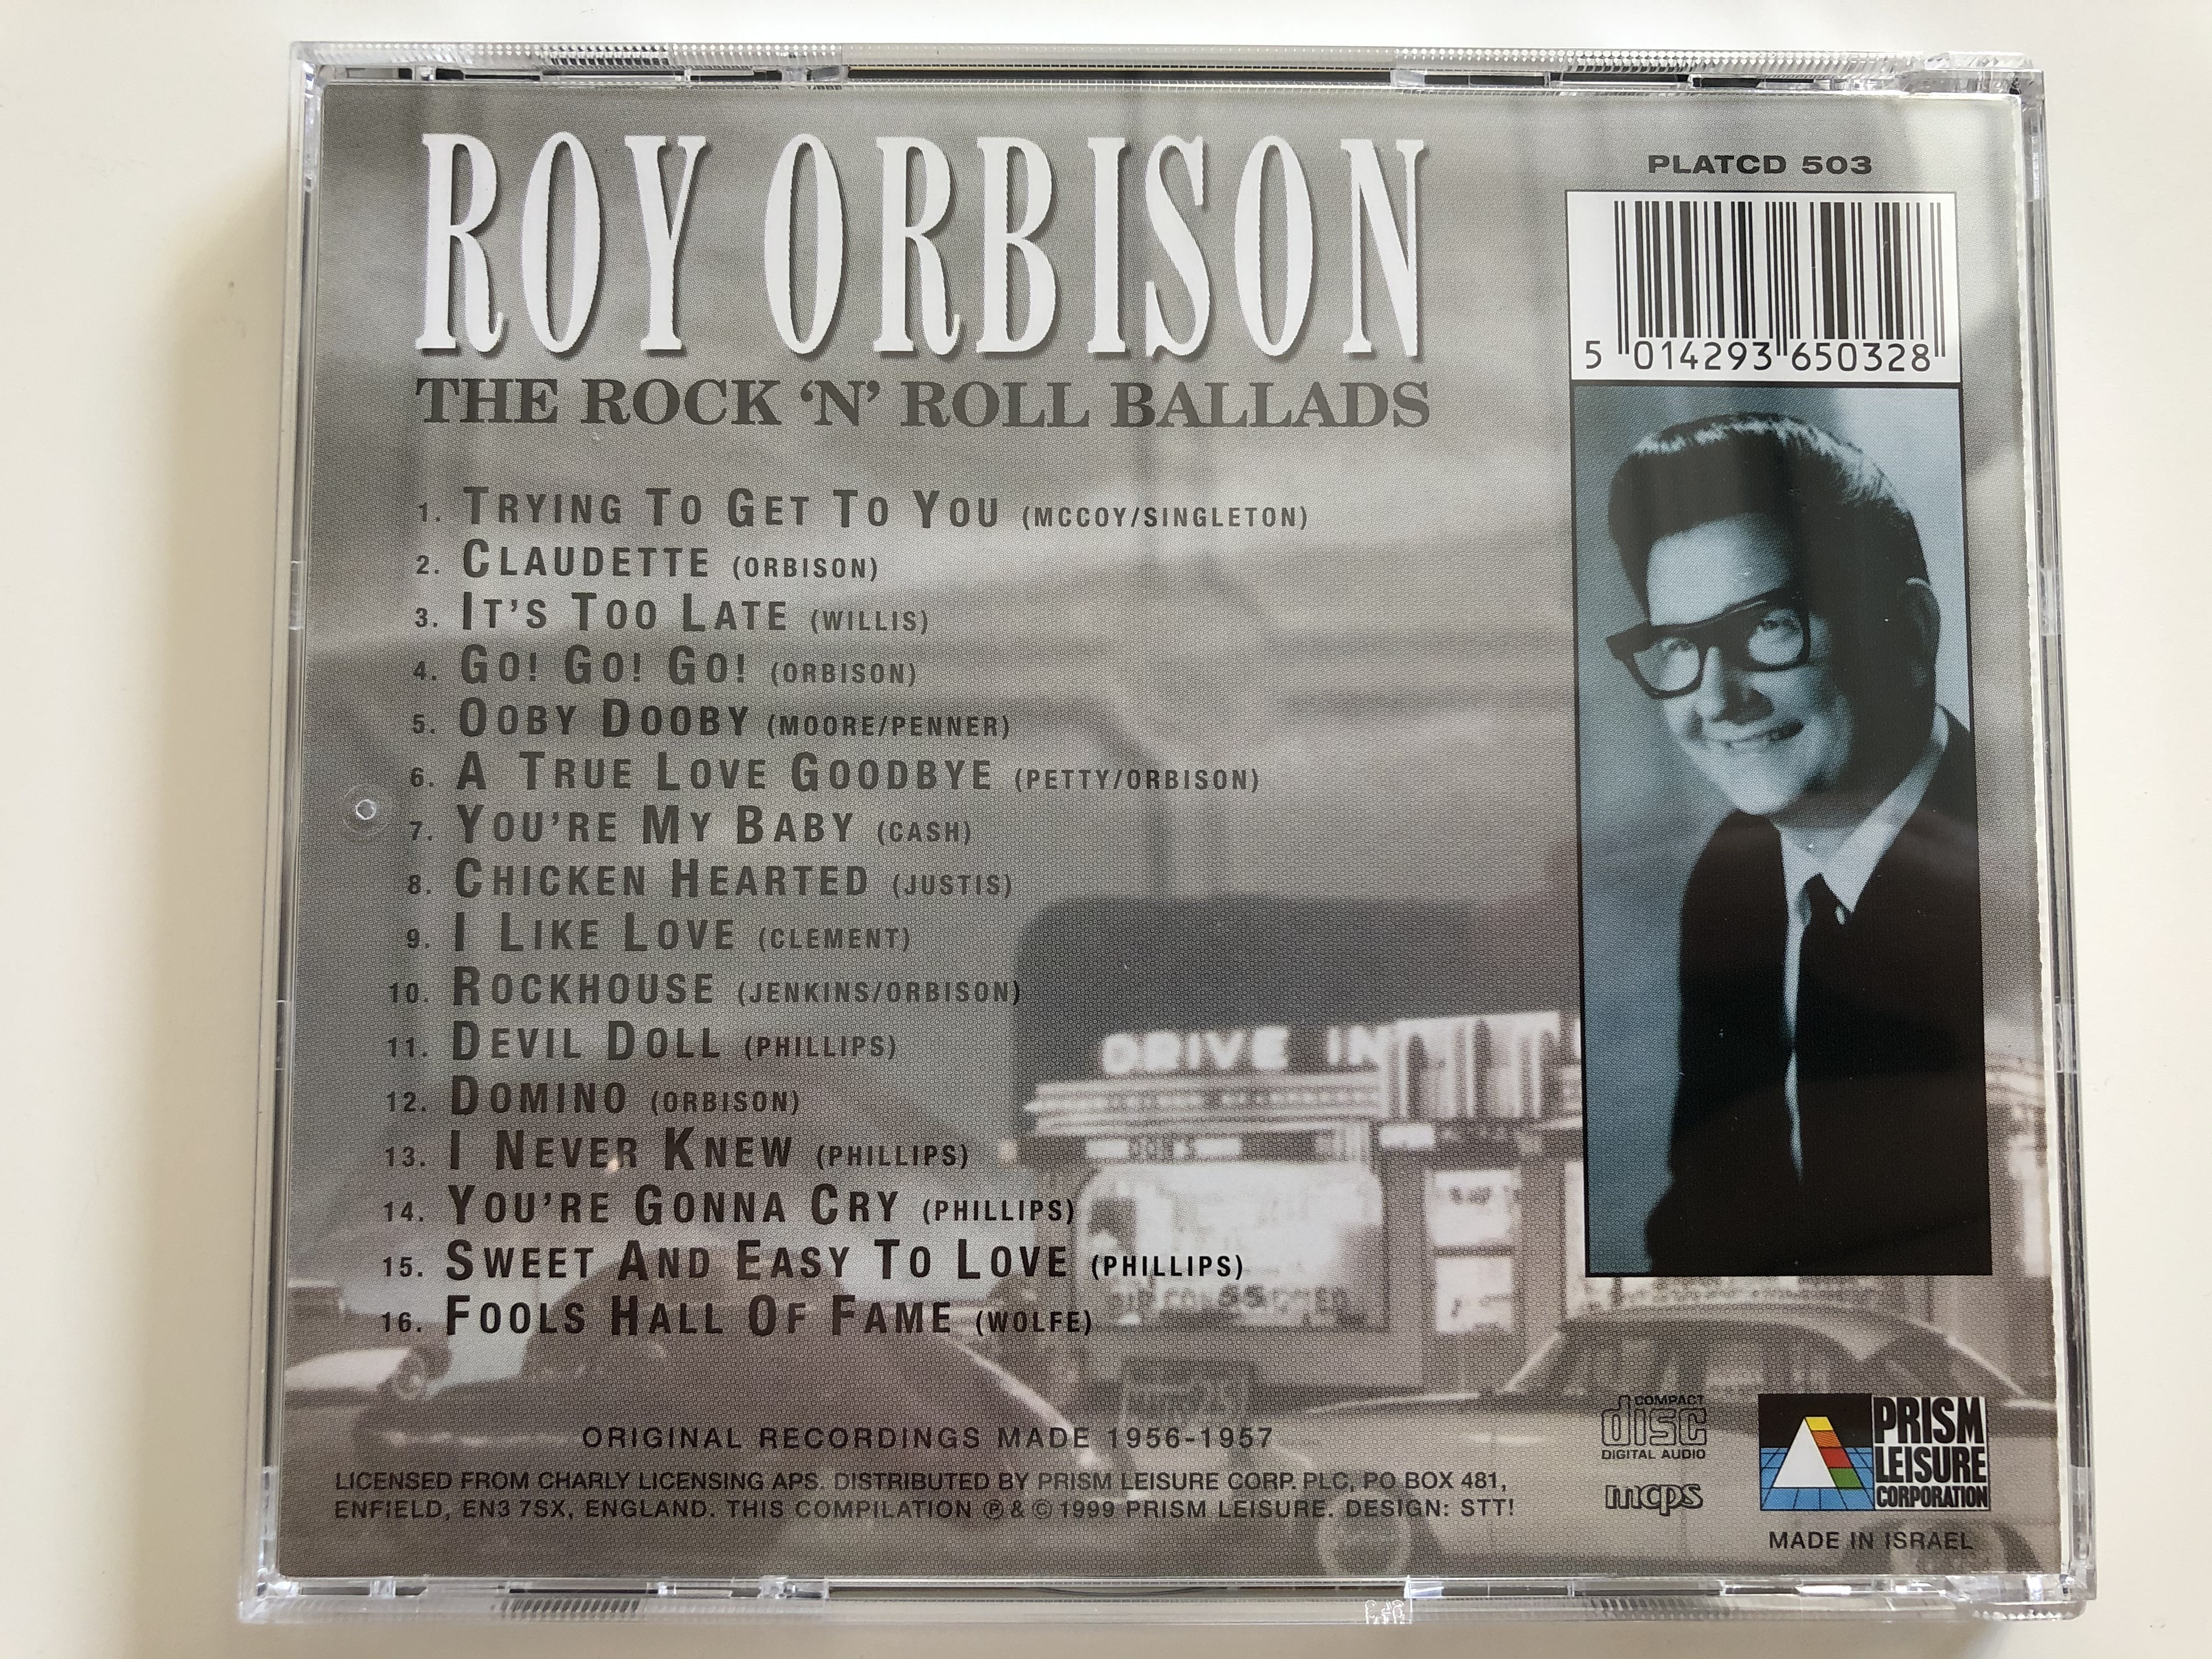 roy-orbison-the-rock-n-roll-ballads-featuring-claudette-ooby-dooby-go-go-go-prism-leisure-audio-cd-1999-platcd-503-5-.jpg